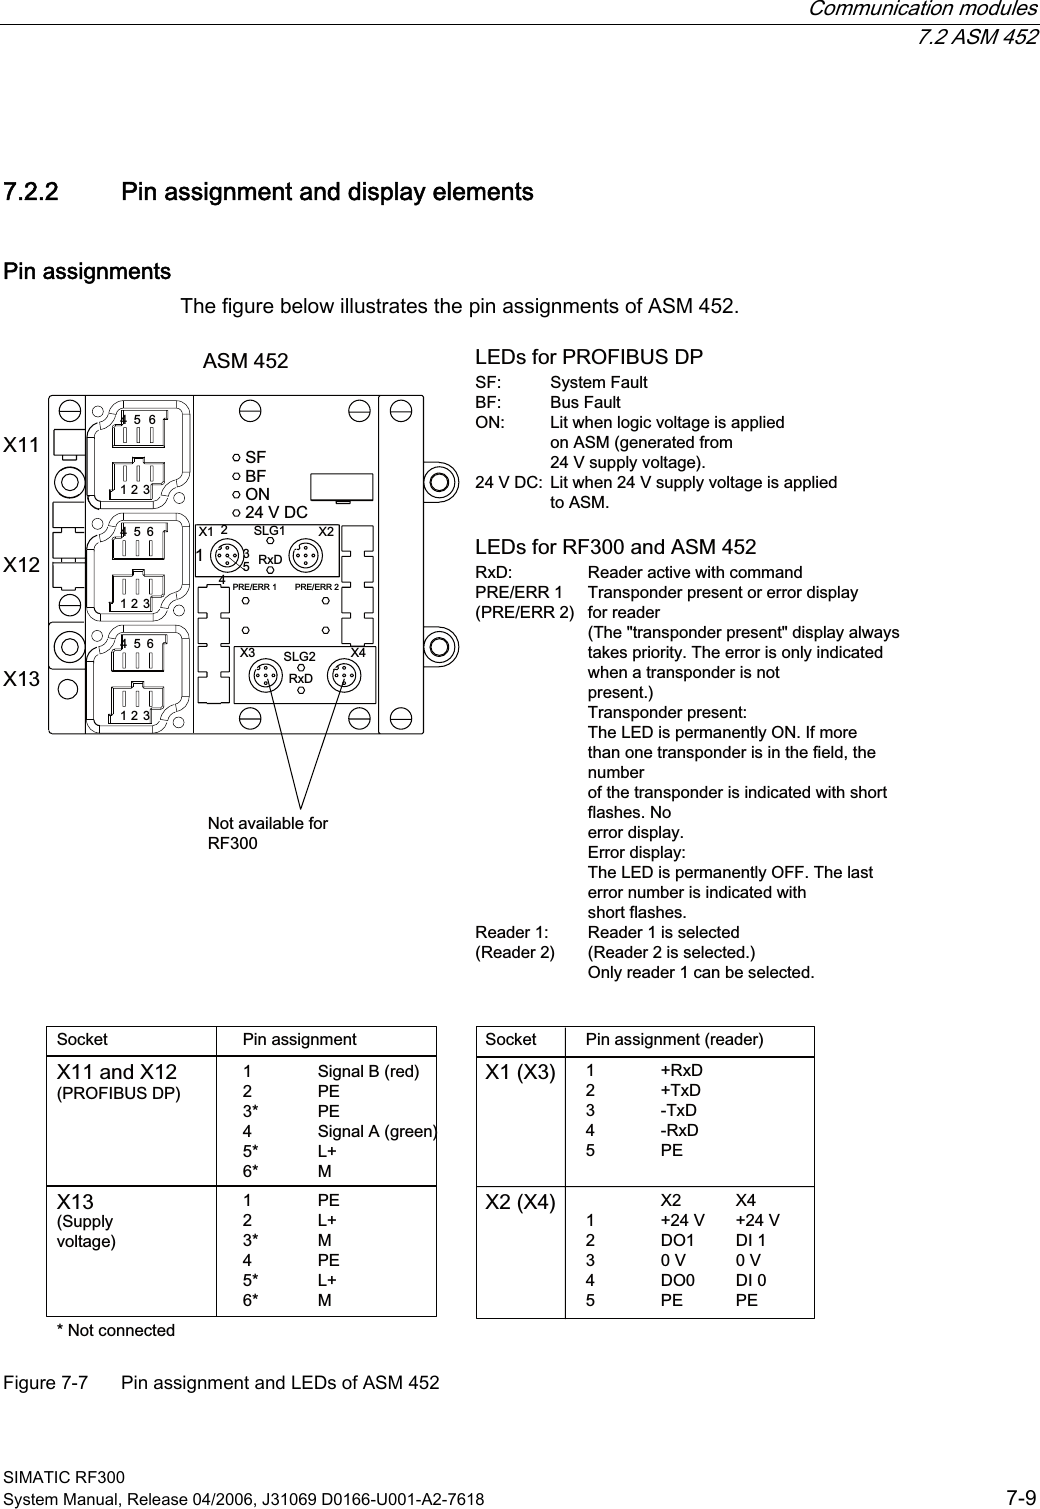  Communication modules  7.2 ASM 452 SIMATIC RF300 System Manual, Release 04/2006, J31069 D0166-U001-A2-7618  7-9 7.2.2  Pin assignment and display elements Pin assignments The figure below illustrates the pin assignments of ASM 452. 352),%86&apos;36RFNHW;DQG;3LQDVVLJQPHQW 6LJQDO%UHG 3( 3( 6LJQDO$JUHHQ / 06XSSO\YROWDJH/(&apos;VIRU5)DQG$605[&apos; 5HDGHUDFWLYHZLWKFRPPDQG35((55 7UDQVSRQGHUSUHVHQWRUHUURUGLVSOD\35((55 IRUUHDGHU 7KHWUDQVSRQGHUSUHVHQWGLVSOD\DOZD\V WDNHVSULRULW\7KHHUURULVRQO\LQGLFDWHG ZKHQDWUDQVSRQGHULVQRW SUHVHQW 7UDQVSRQGHUSUHVHQW 7KH/(&apos;LVSHUPDQHQWO\21,IPRUH WKDQRQHWUDQVSRQGHULVLQWKHILHOGWKH QXPEHU RIWKHWUDQVSRQGHULVLQGLFDWHGZLWKVKRUW IODVKHV1R HUURUGLVSOD\ (UURUGLVSOD\ 7KH/(&apos;LVSHUPDQHQWO\2))7KHODVW HUURUQXPEHULVLQGLFDWHGZLWK VKRUWIODVKHV5HDGHU 5HDGHULVVHOHFWHG5HDGHU 5HDGHULVVHOHFWHG 2QO\UHDGHUFDQEHVHOHFWHG/(&apos;VIRU352),%86&apos;36) 6\VWHP)DXOW%) %XV)DXOW21 /LWZKHQORJLFYROWDJHLVDSSOLHG RQ$60JHQHUDWHGIURP 9VXSSO\YROWDJHb9&apos;&amp; /LWZKHQ9VXSSO\YROWDJHLVDSSOLHG WR$601RWFRQQHFWHG3LQDVVLJQPHQWUHDGHU6RFNHW1RWDYDLODEOHIRU5);;;;$60b; ;; ;;;;9&apos;&amp;5[&apos;35((556/*5[&apos;6/*35((556)%)21 3( / 0 3( / 0; 5[&apos; 7[&apos; 7[&apos; 5[&apos; 3( ; ; 9 9 &apos;2 &apos;, 9 9 &apos;2 &apos;, 3( 3( Figure 7-7  Pin assignment and LEDs of ASM 452 